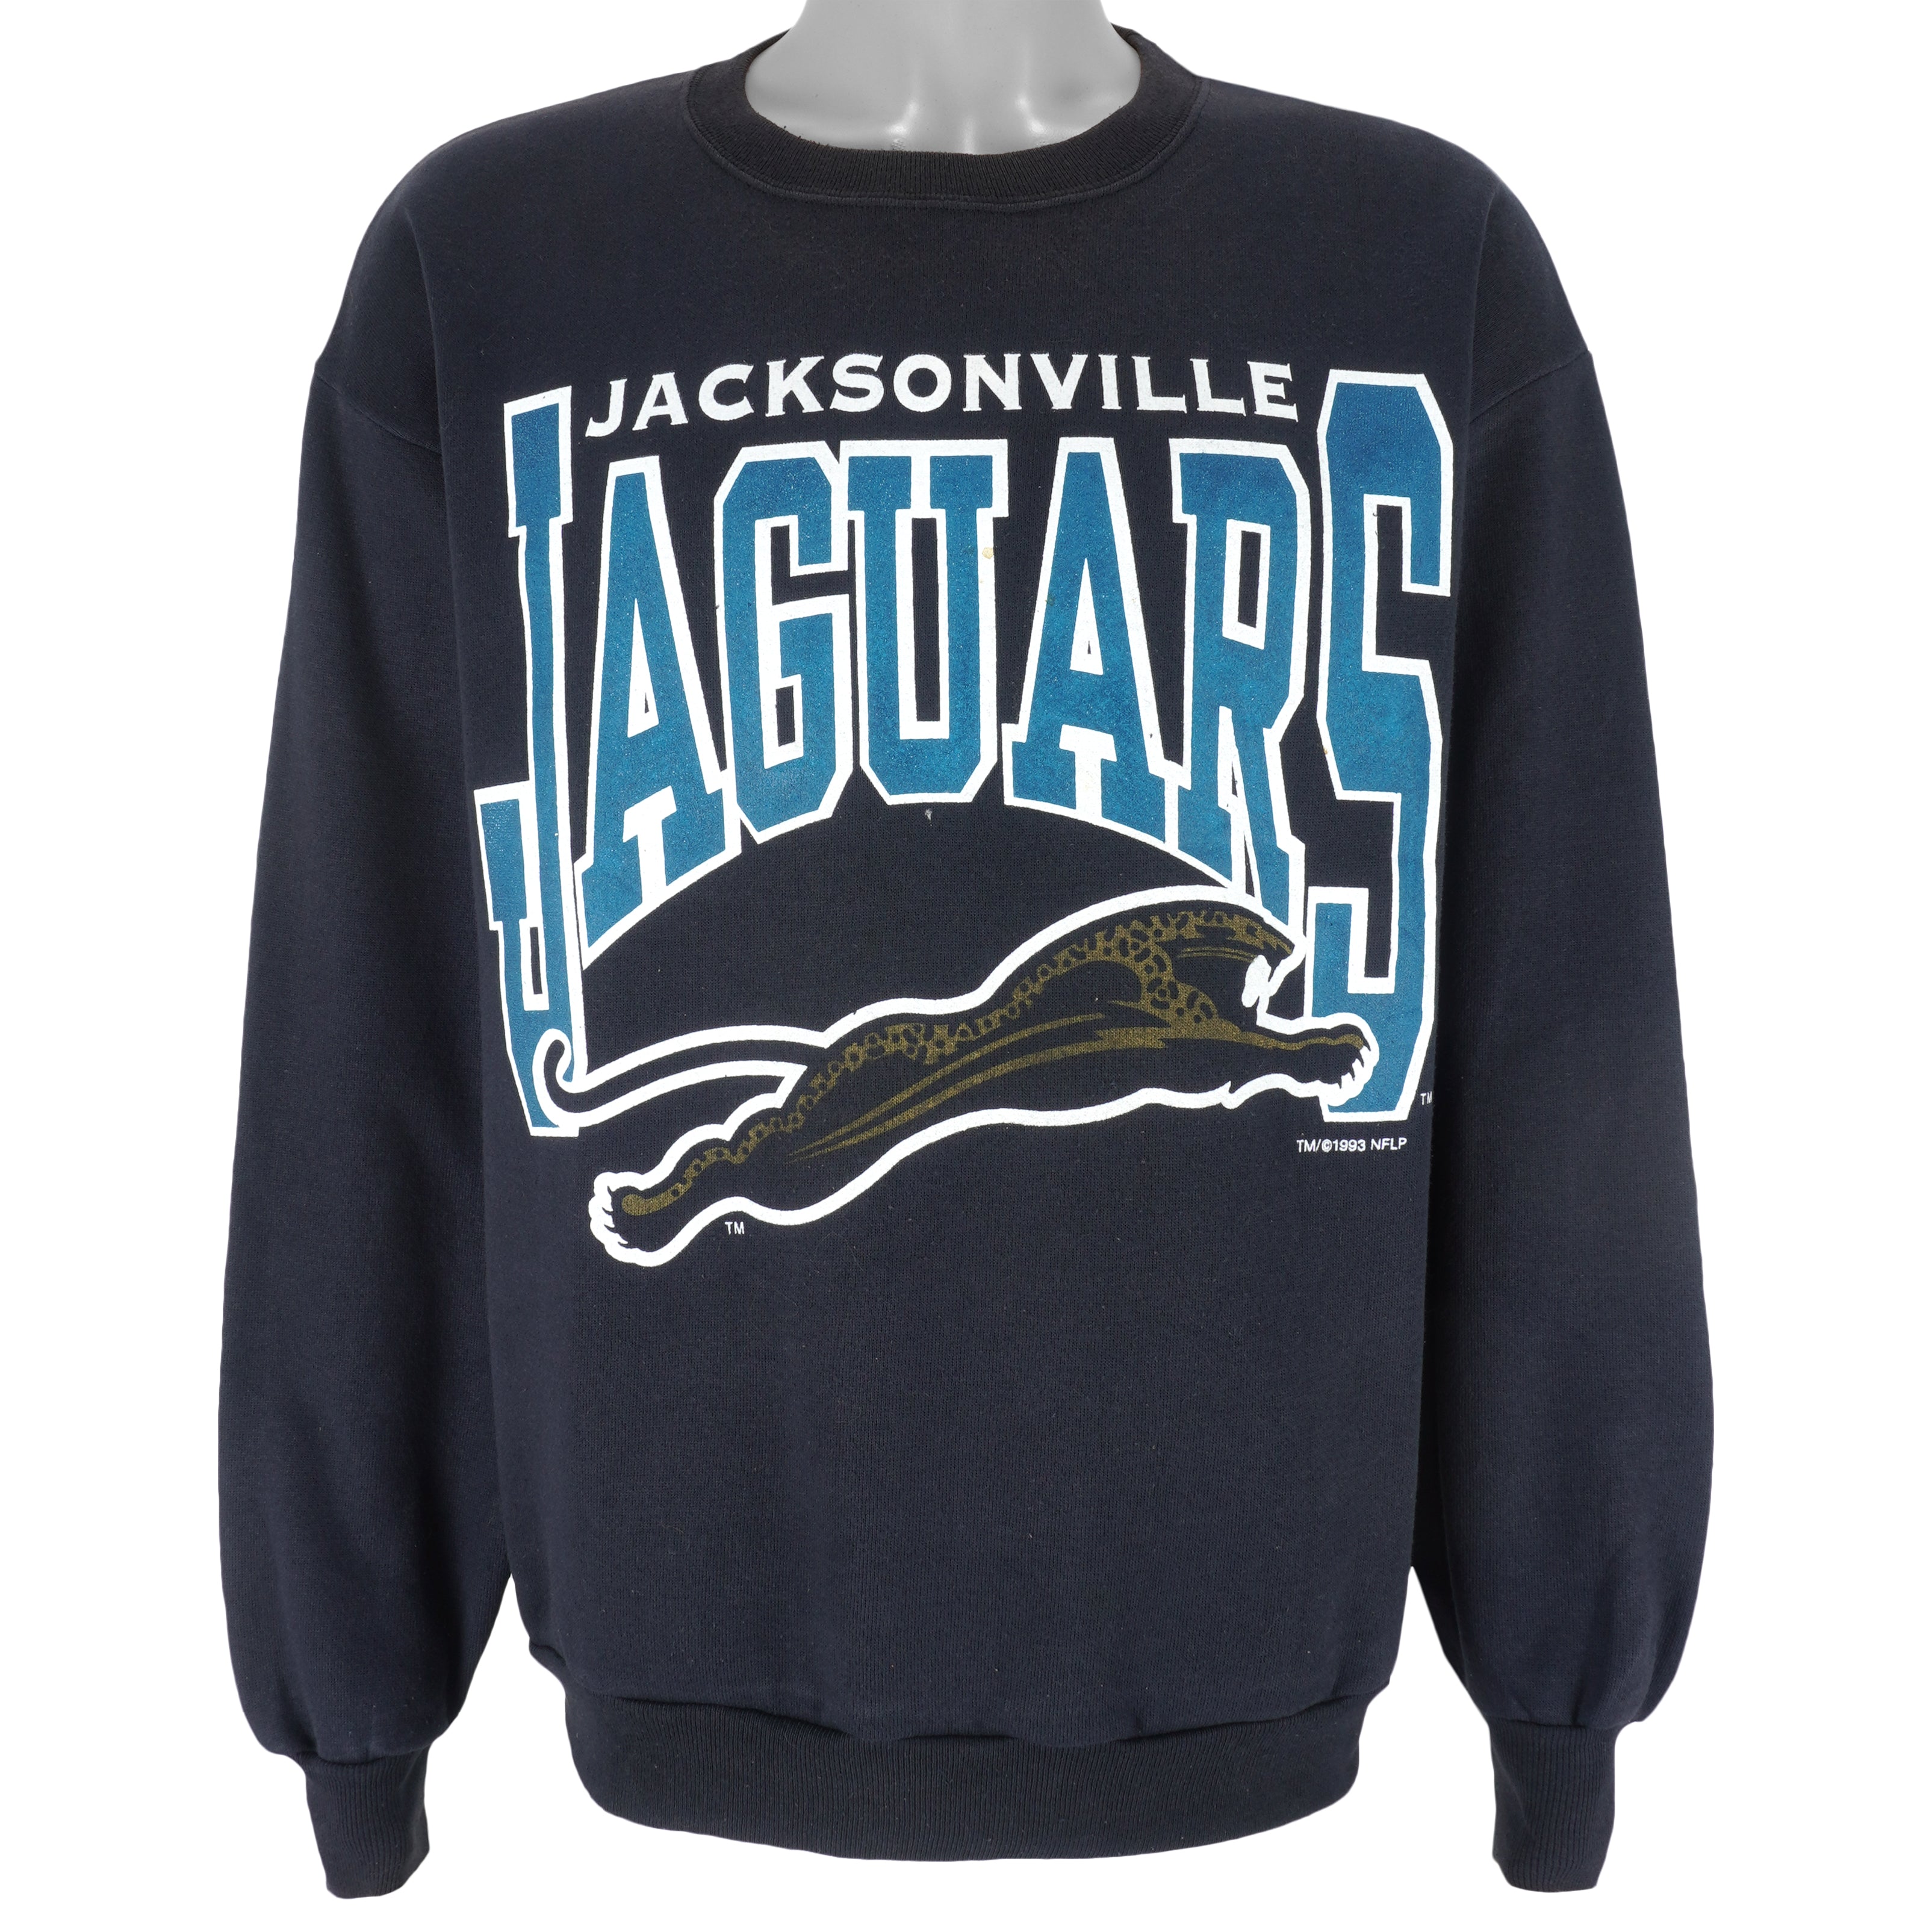 teal jaguars sweatshirt